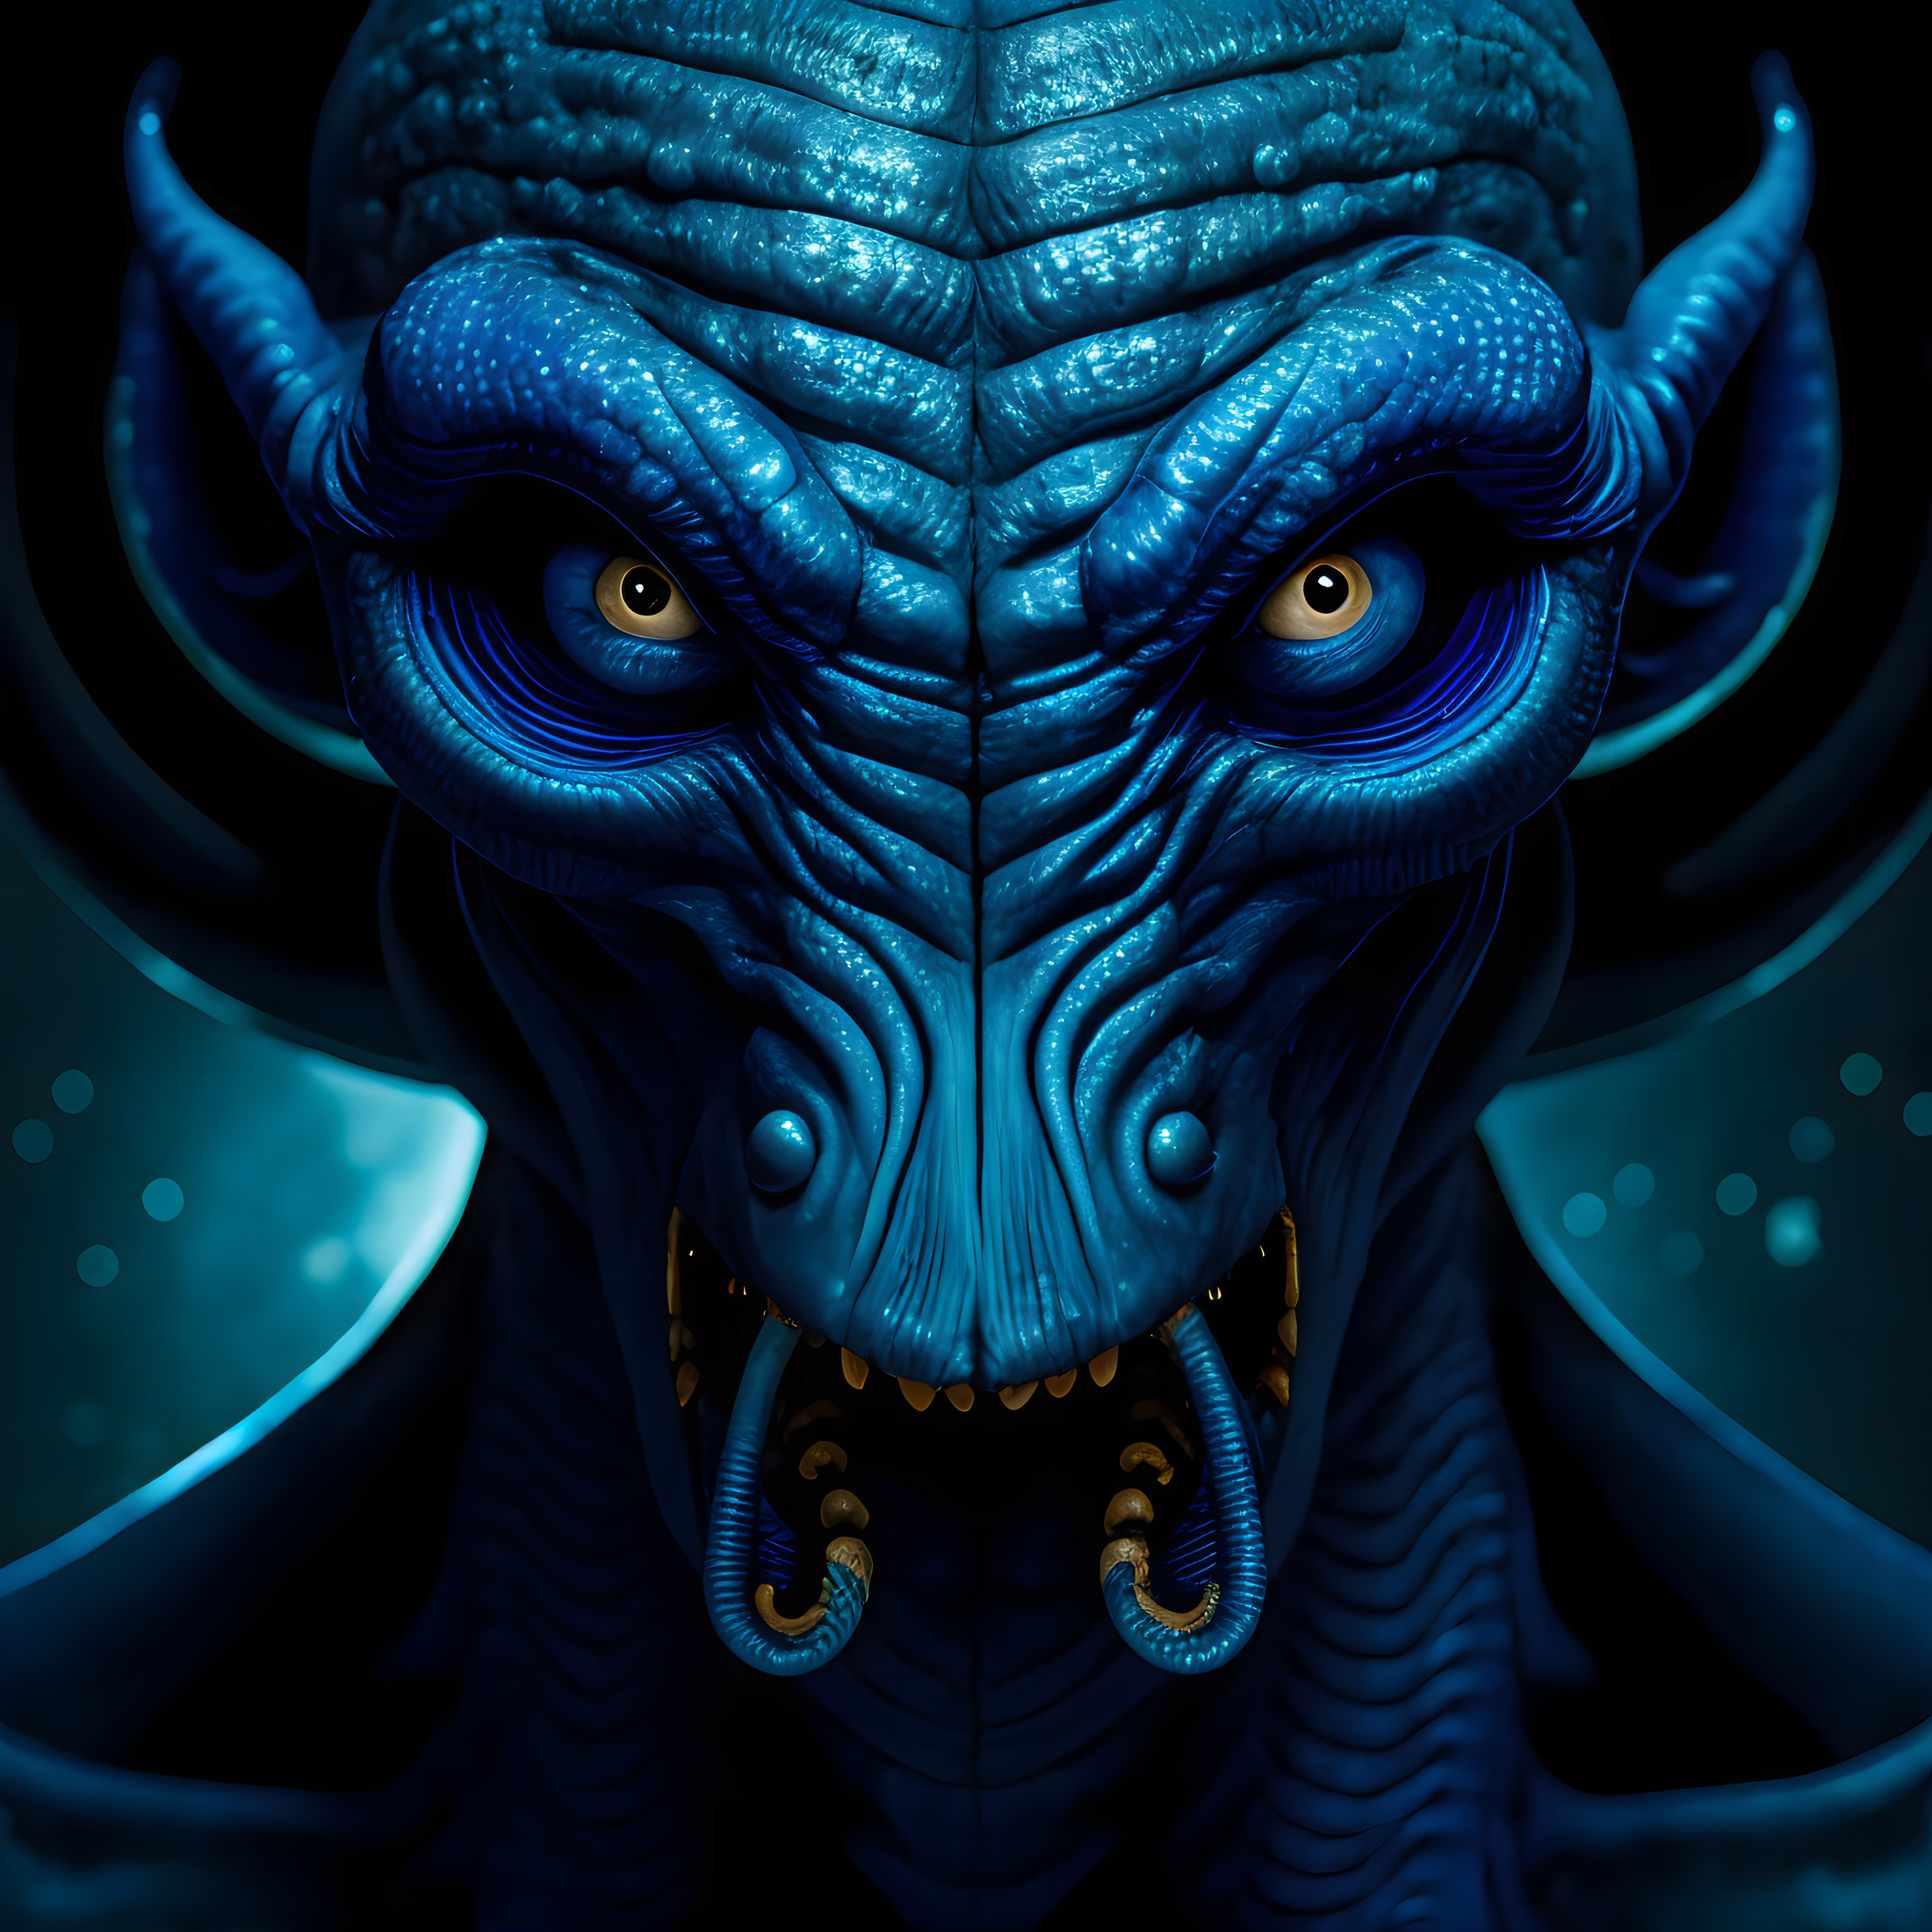 8k uhd, sharp focus, masterpiece, RAW photo, high quality, highres,
portrait of an alien,((blue skin)),[cthulhu|monster he...